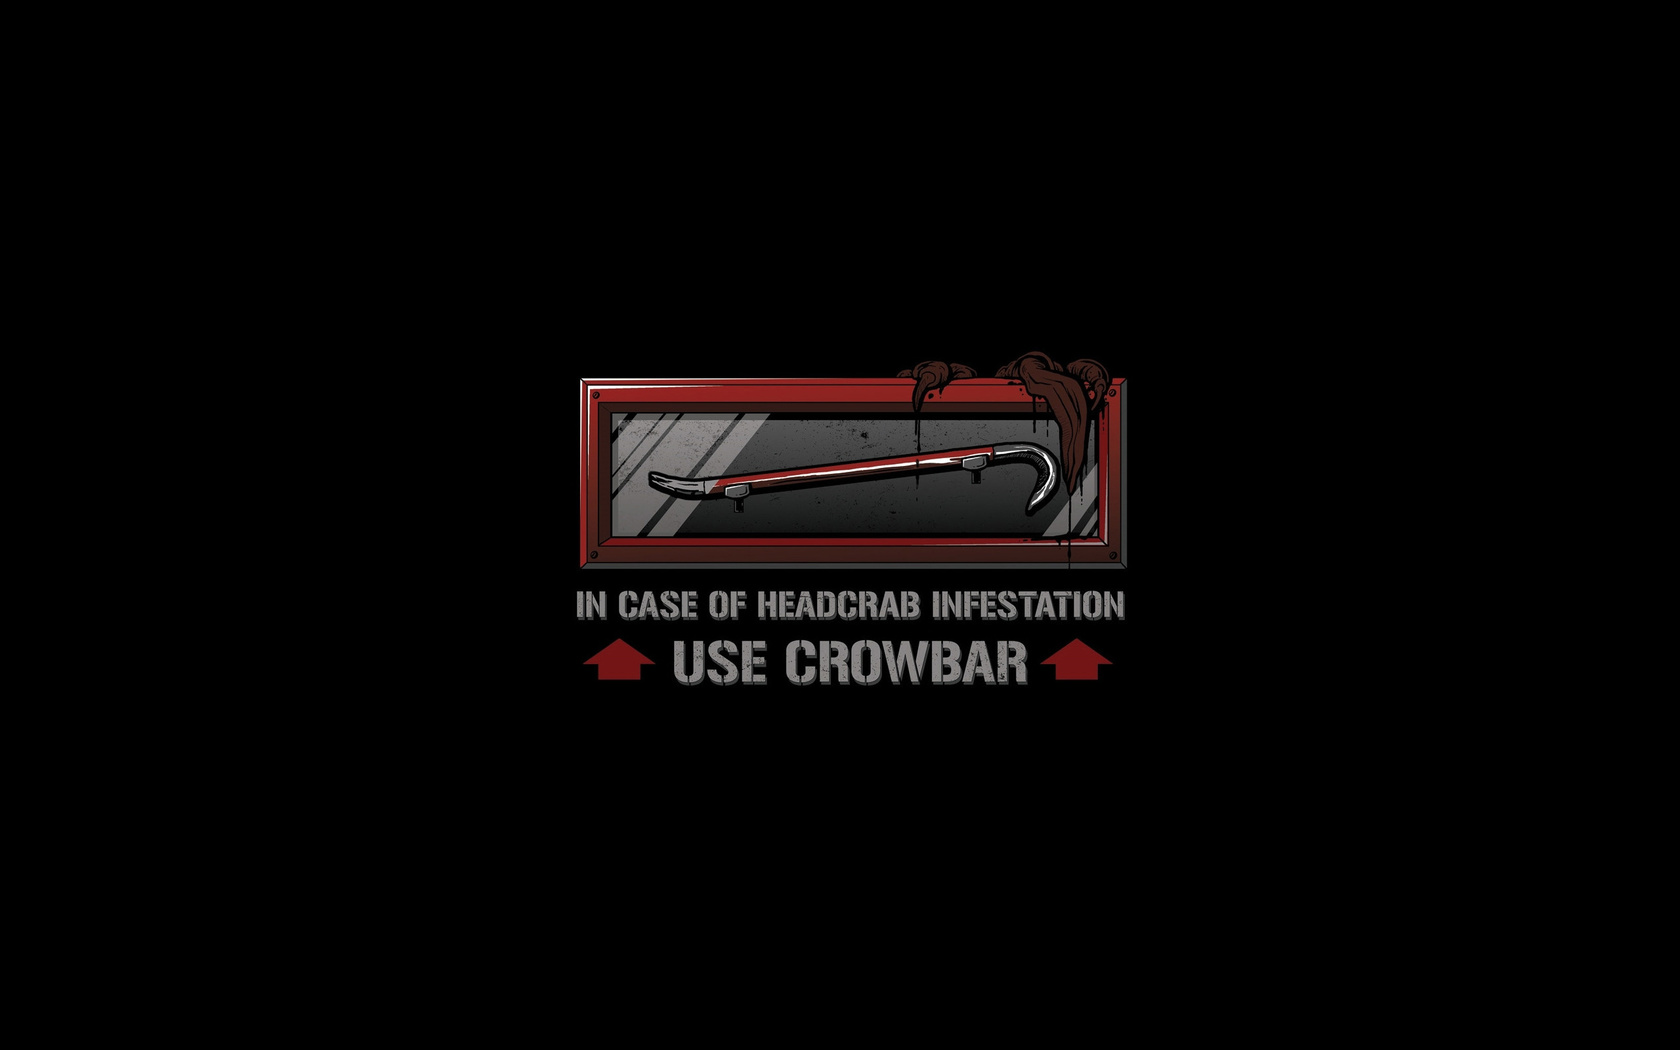 , half life, Use crowbars